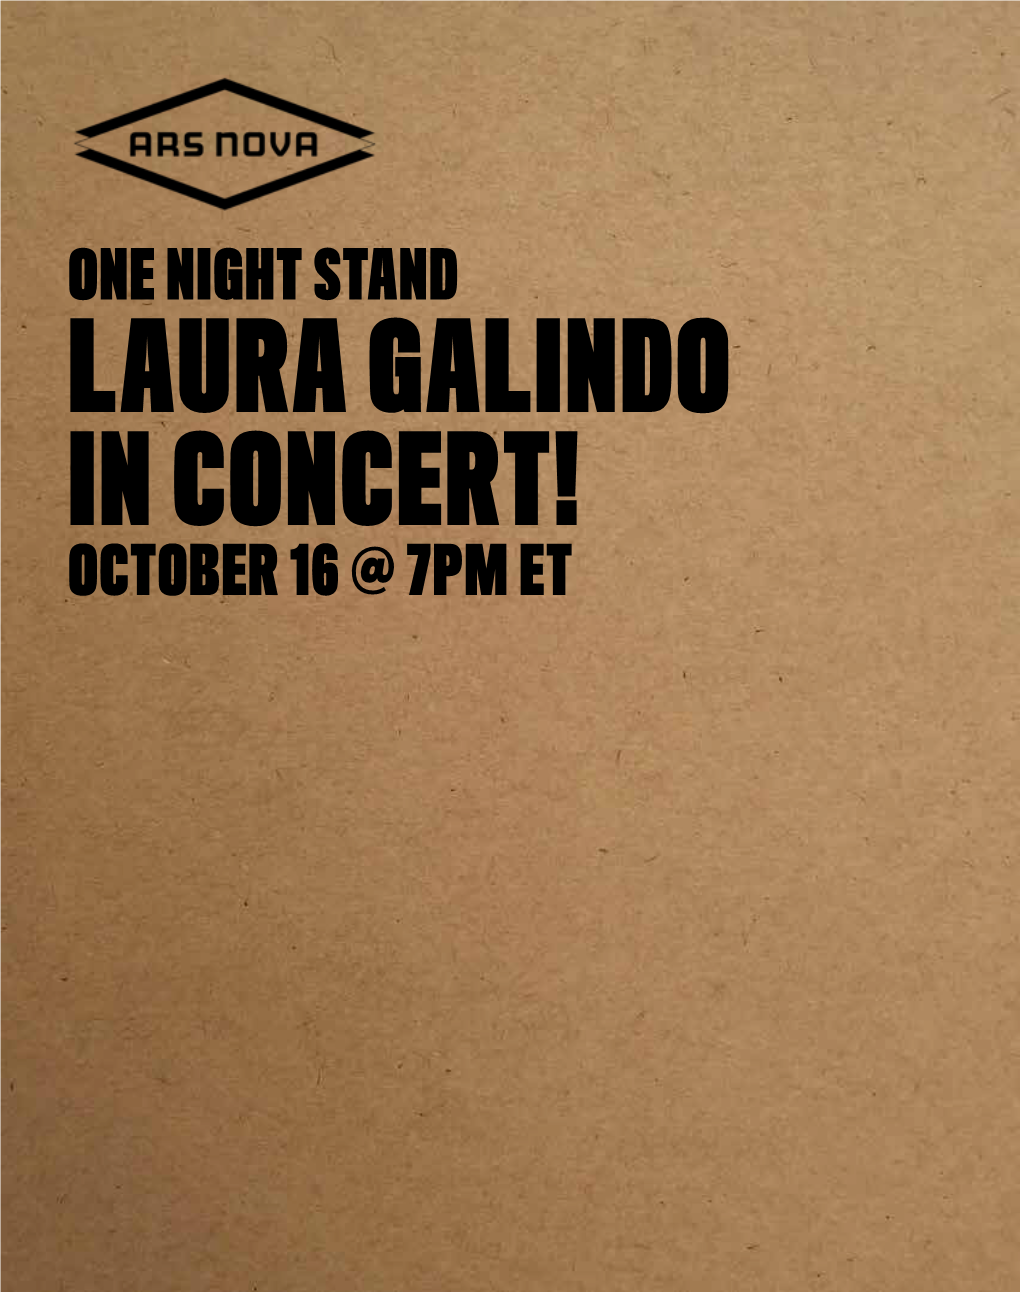 Laura Galindo in Concert!